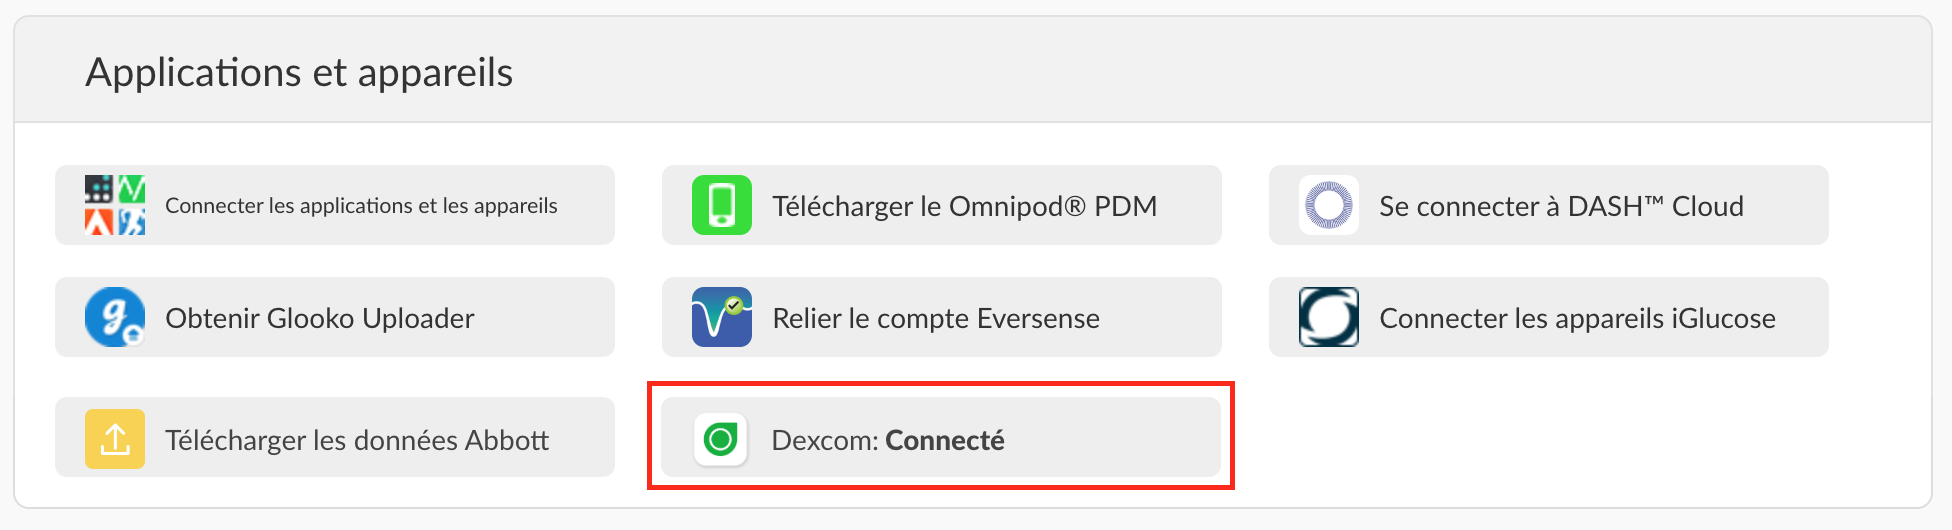 french-web-selectdexcom.png